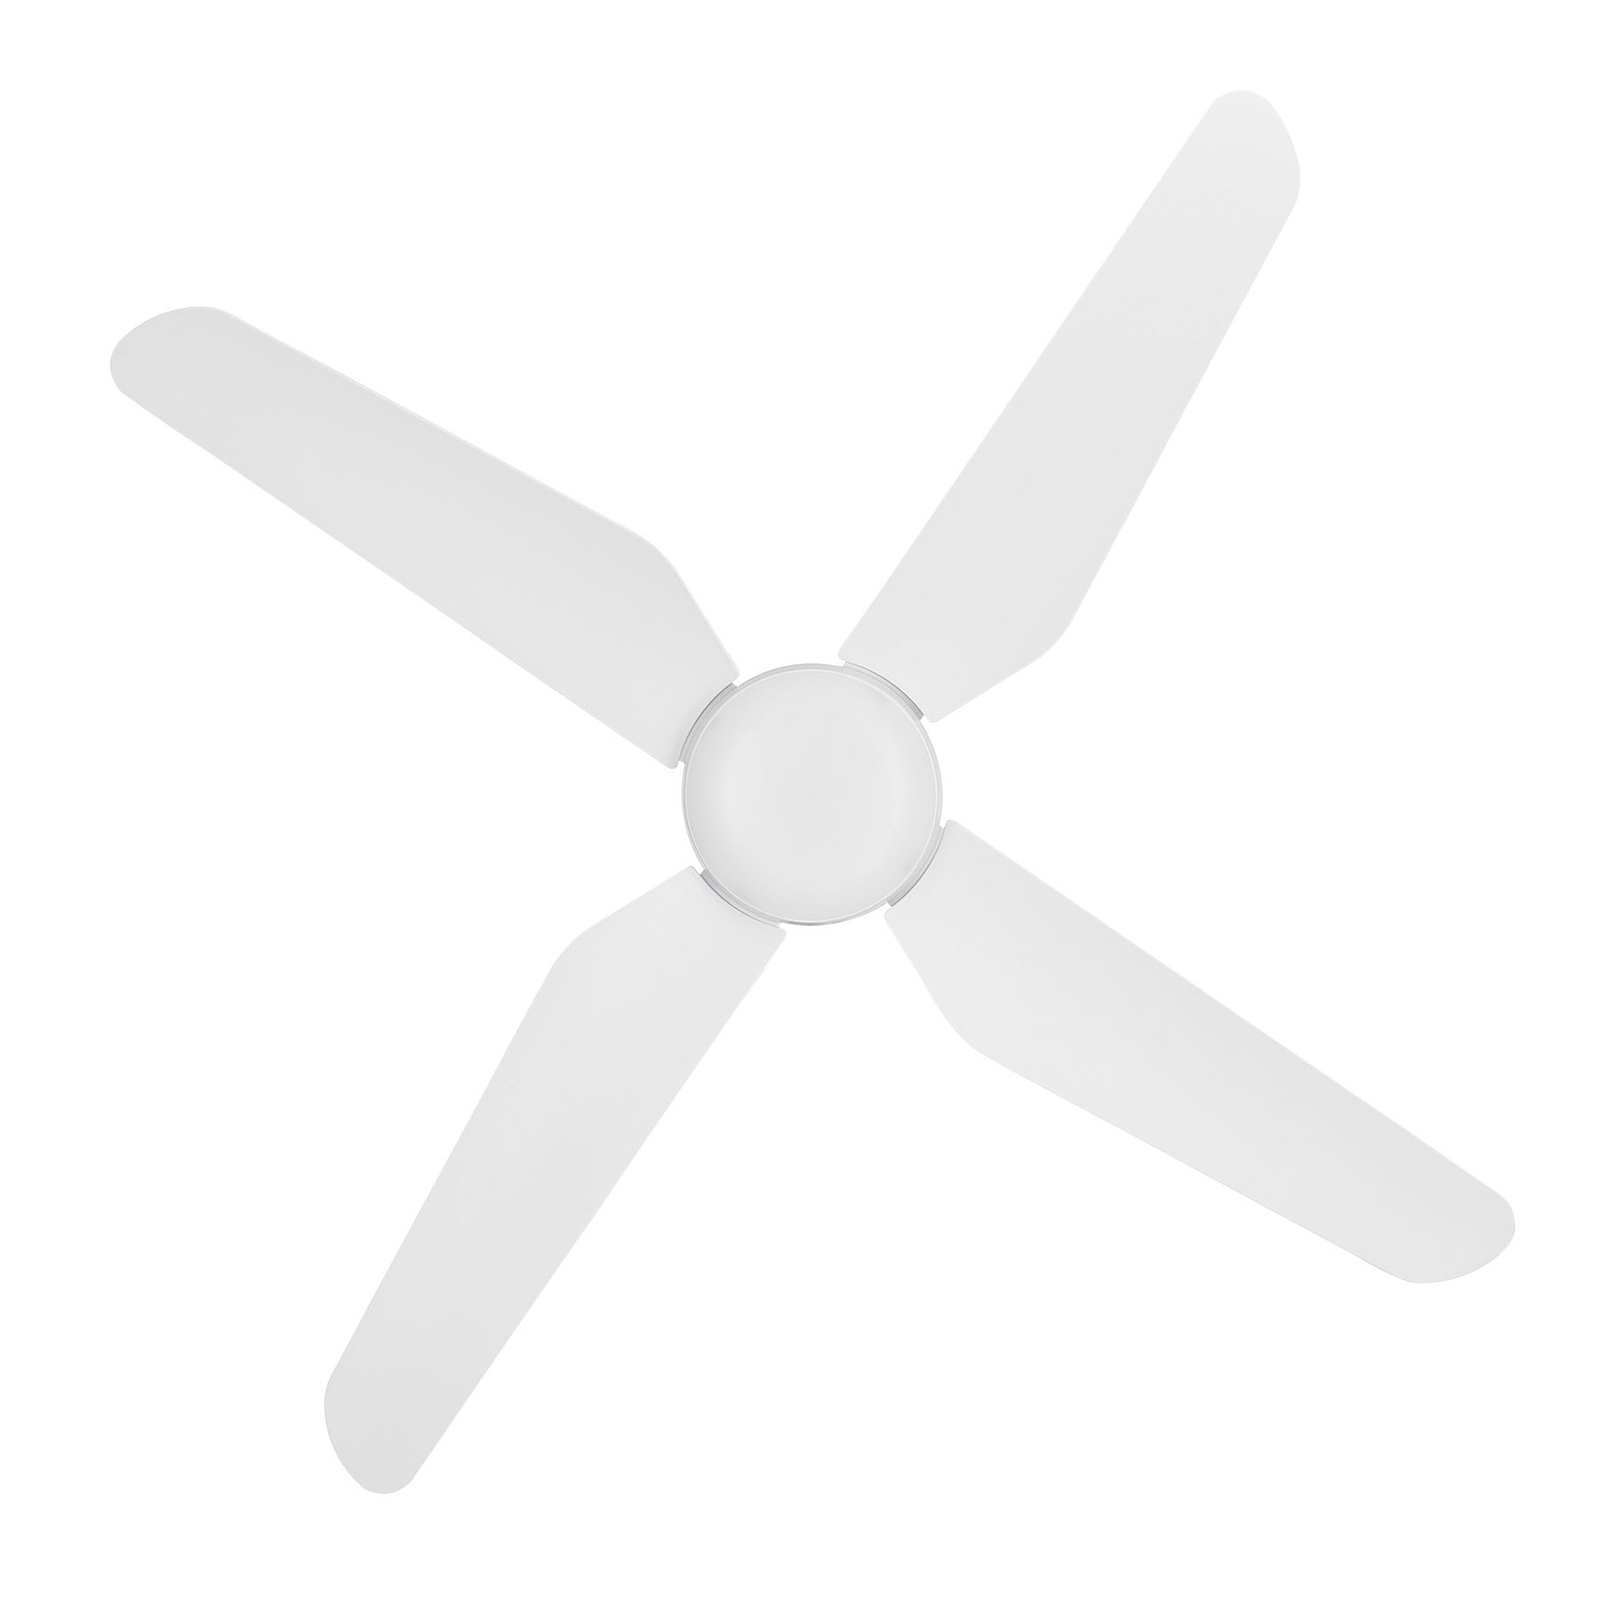 Beacon LED ceiling fan Aria white silent 122 cm